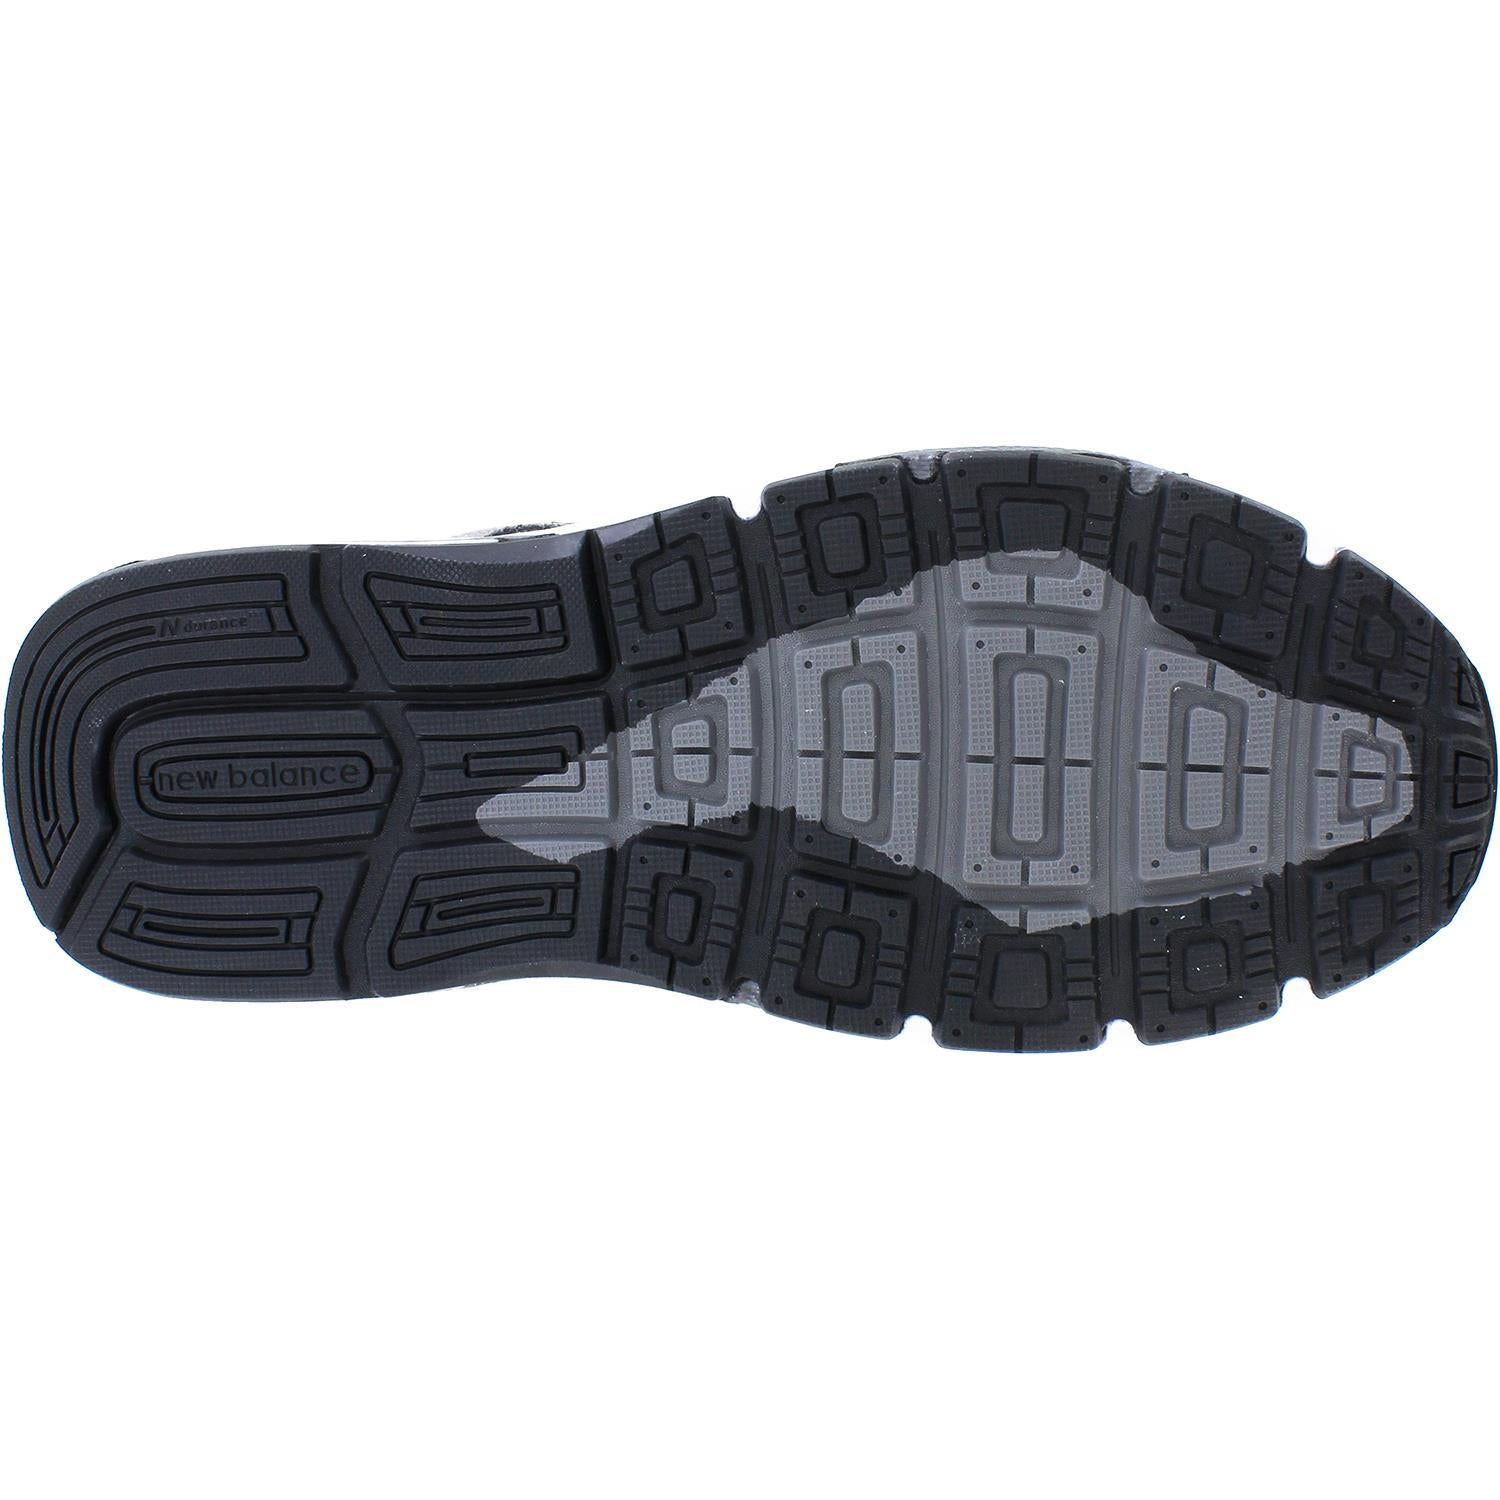 New Balance M1540v3 Grey | Men's Running Shoes | Footwear etc.